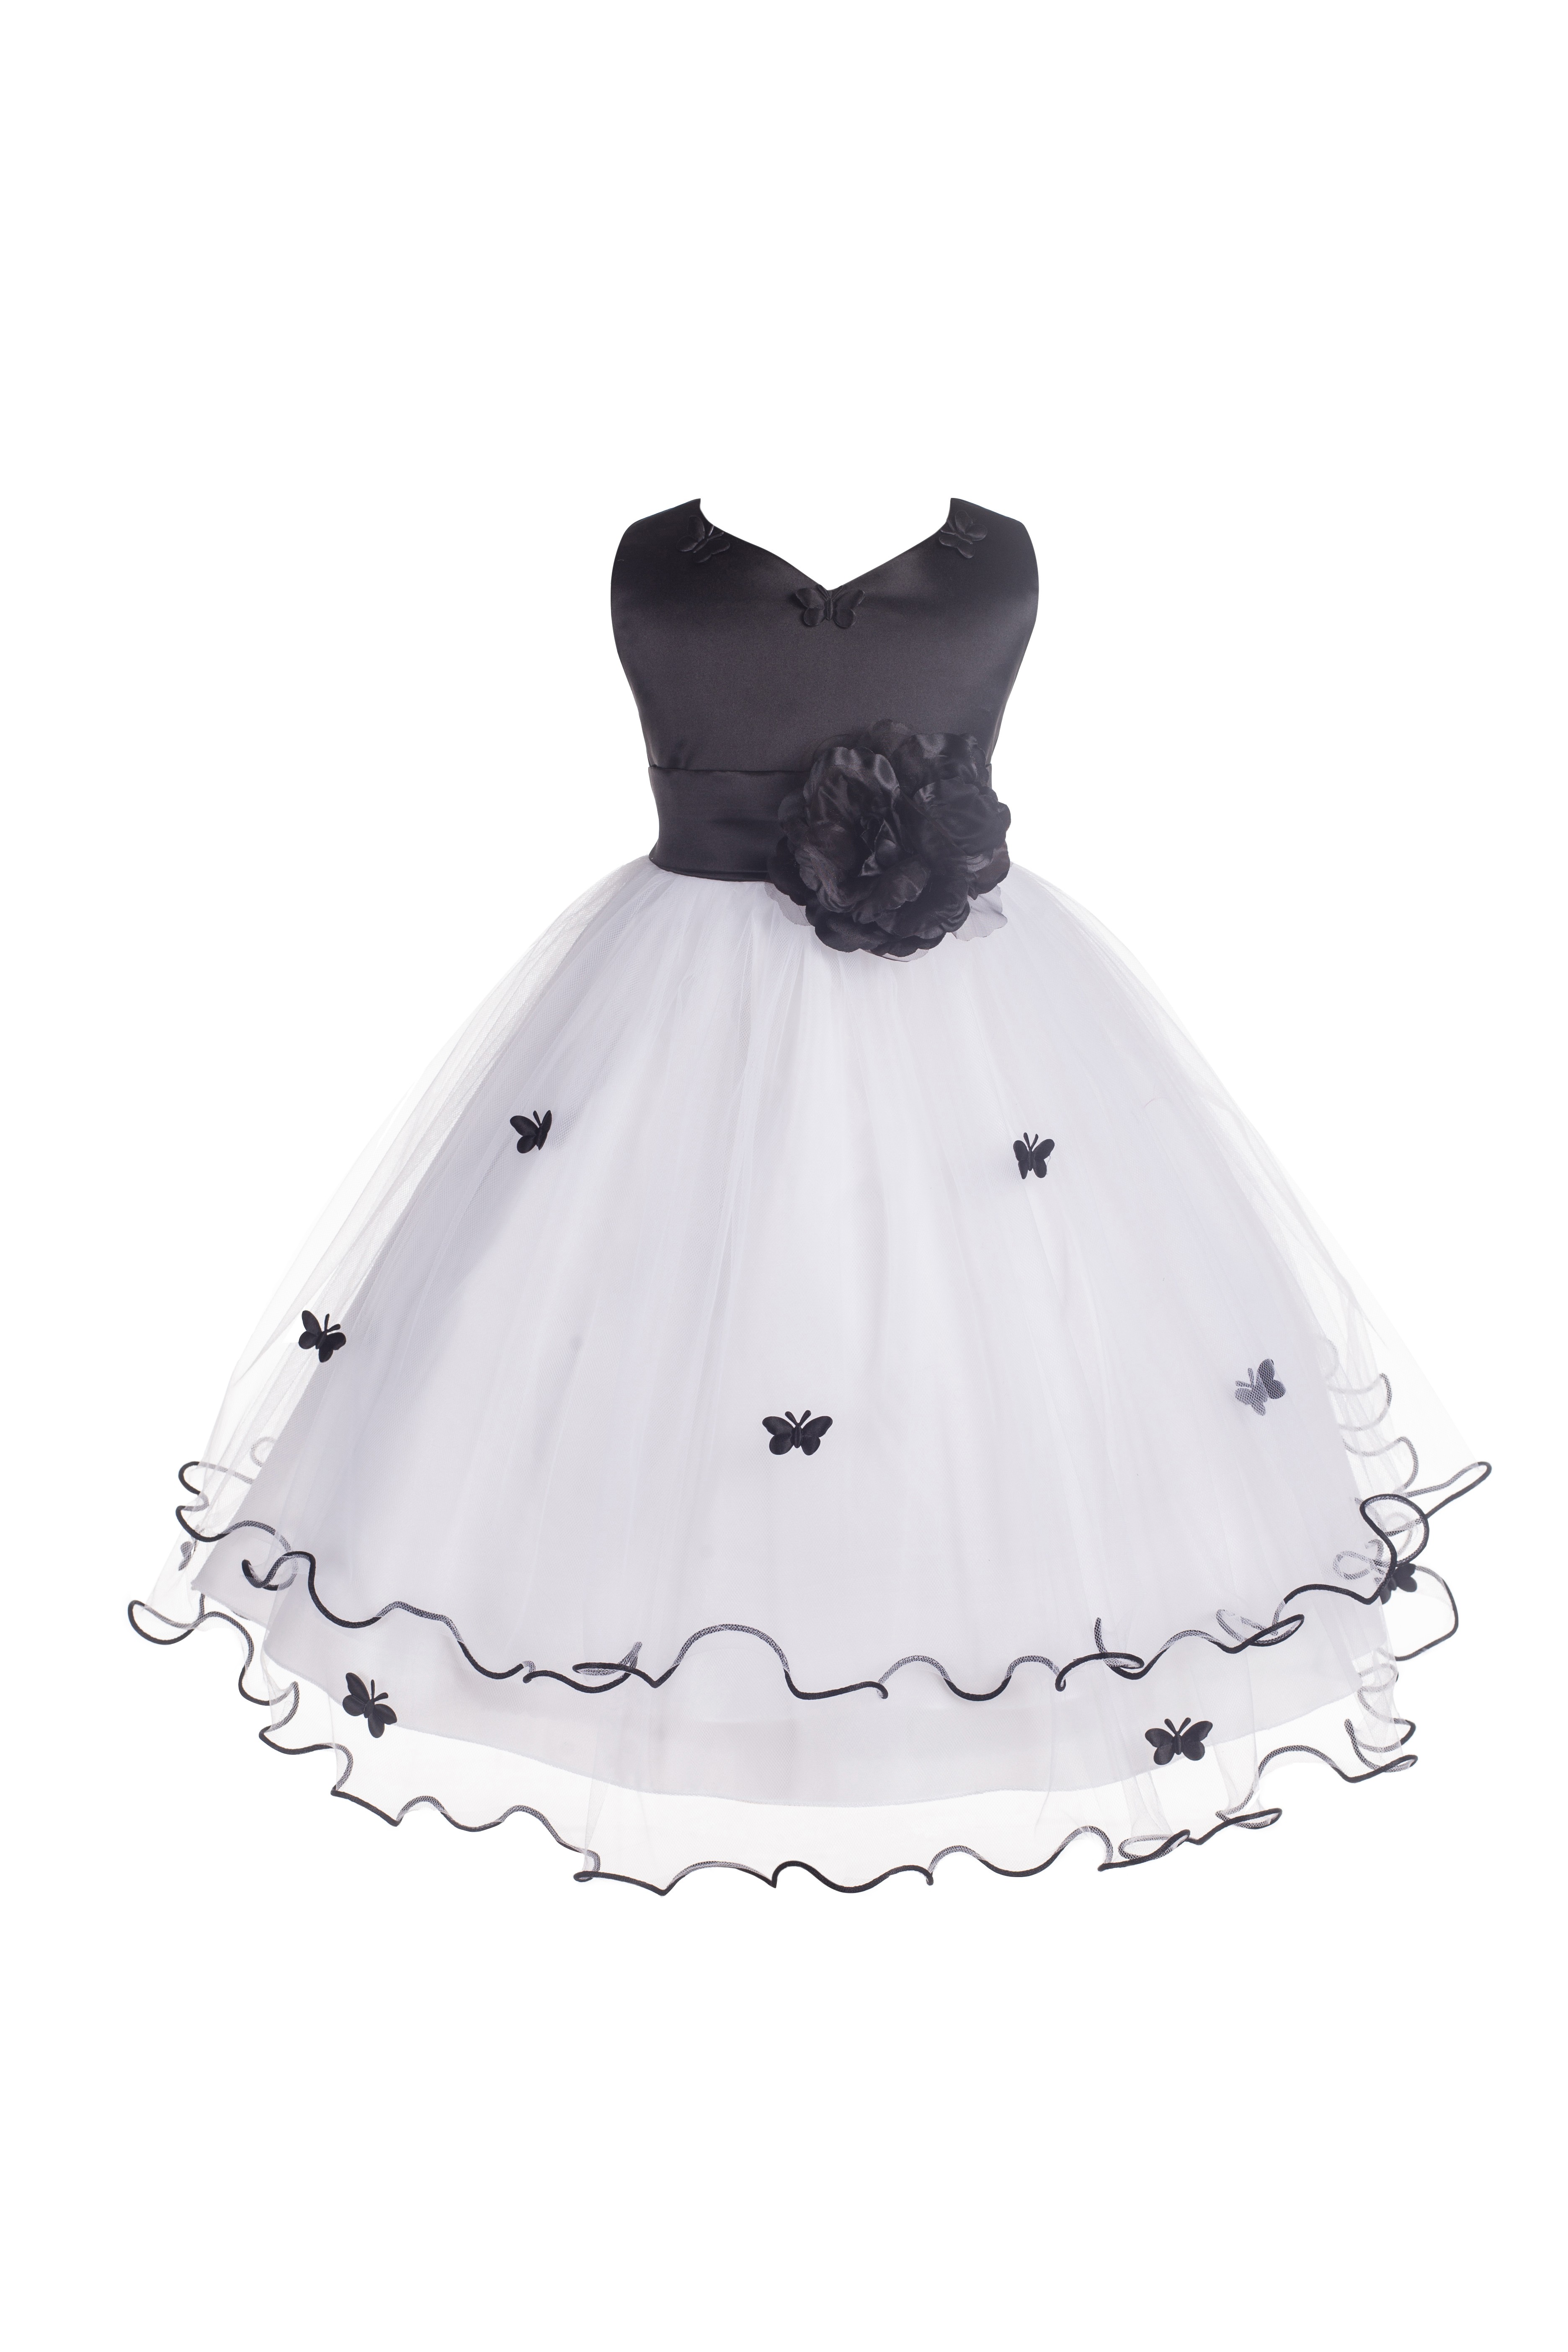 Black Satin Tulle Butterflies Flower Girl Dress Occasions 801S